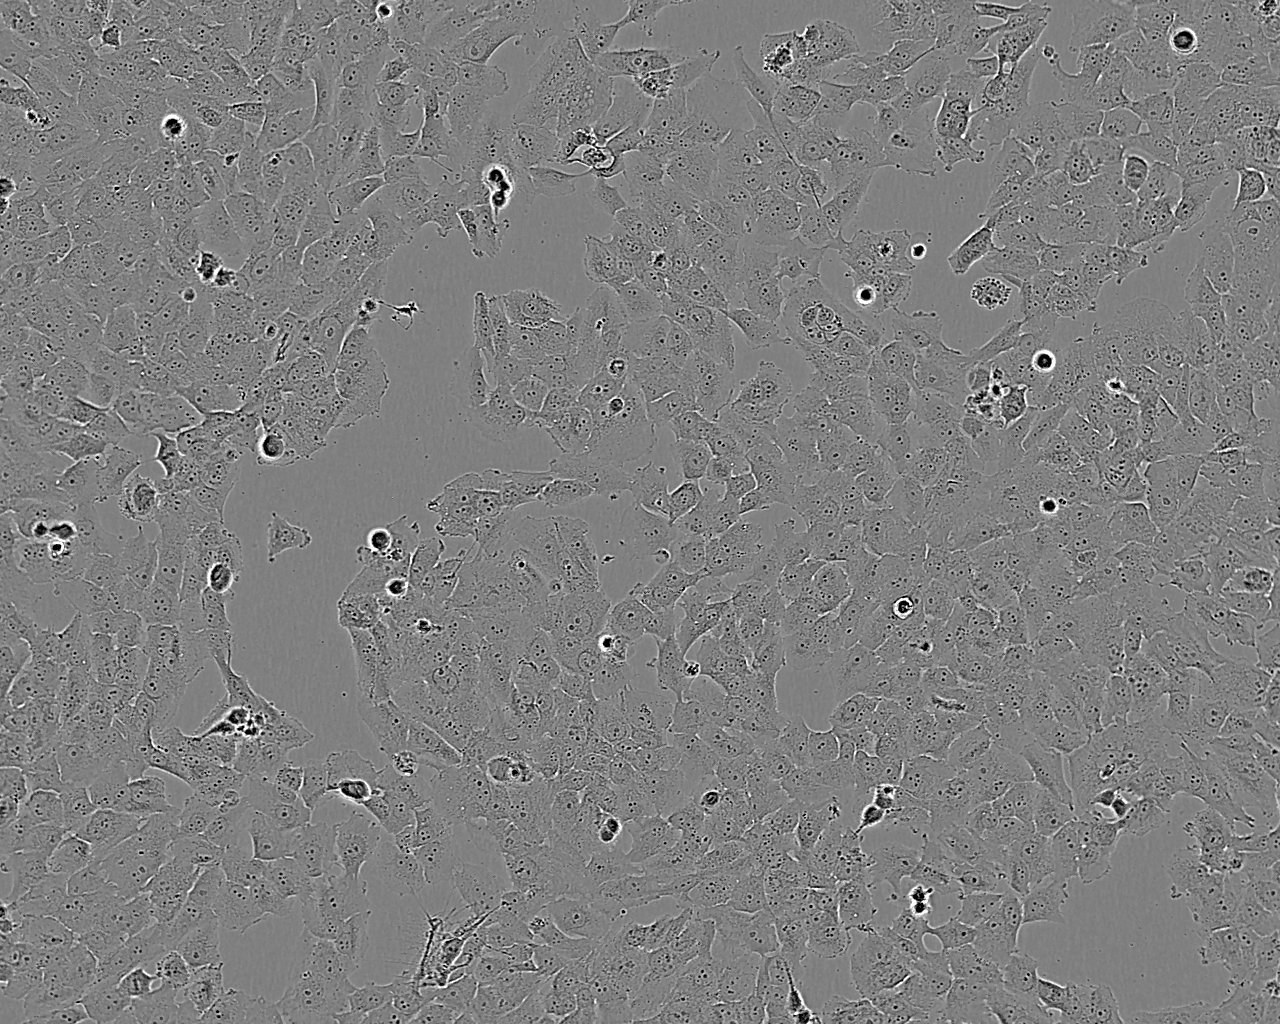 TE-13 epithelioid cells人食管癌细胞系,TE-13 epithelioid cells